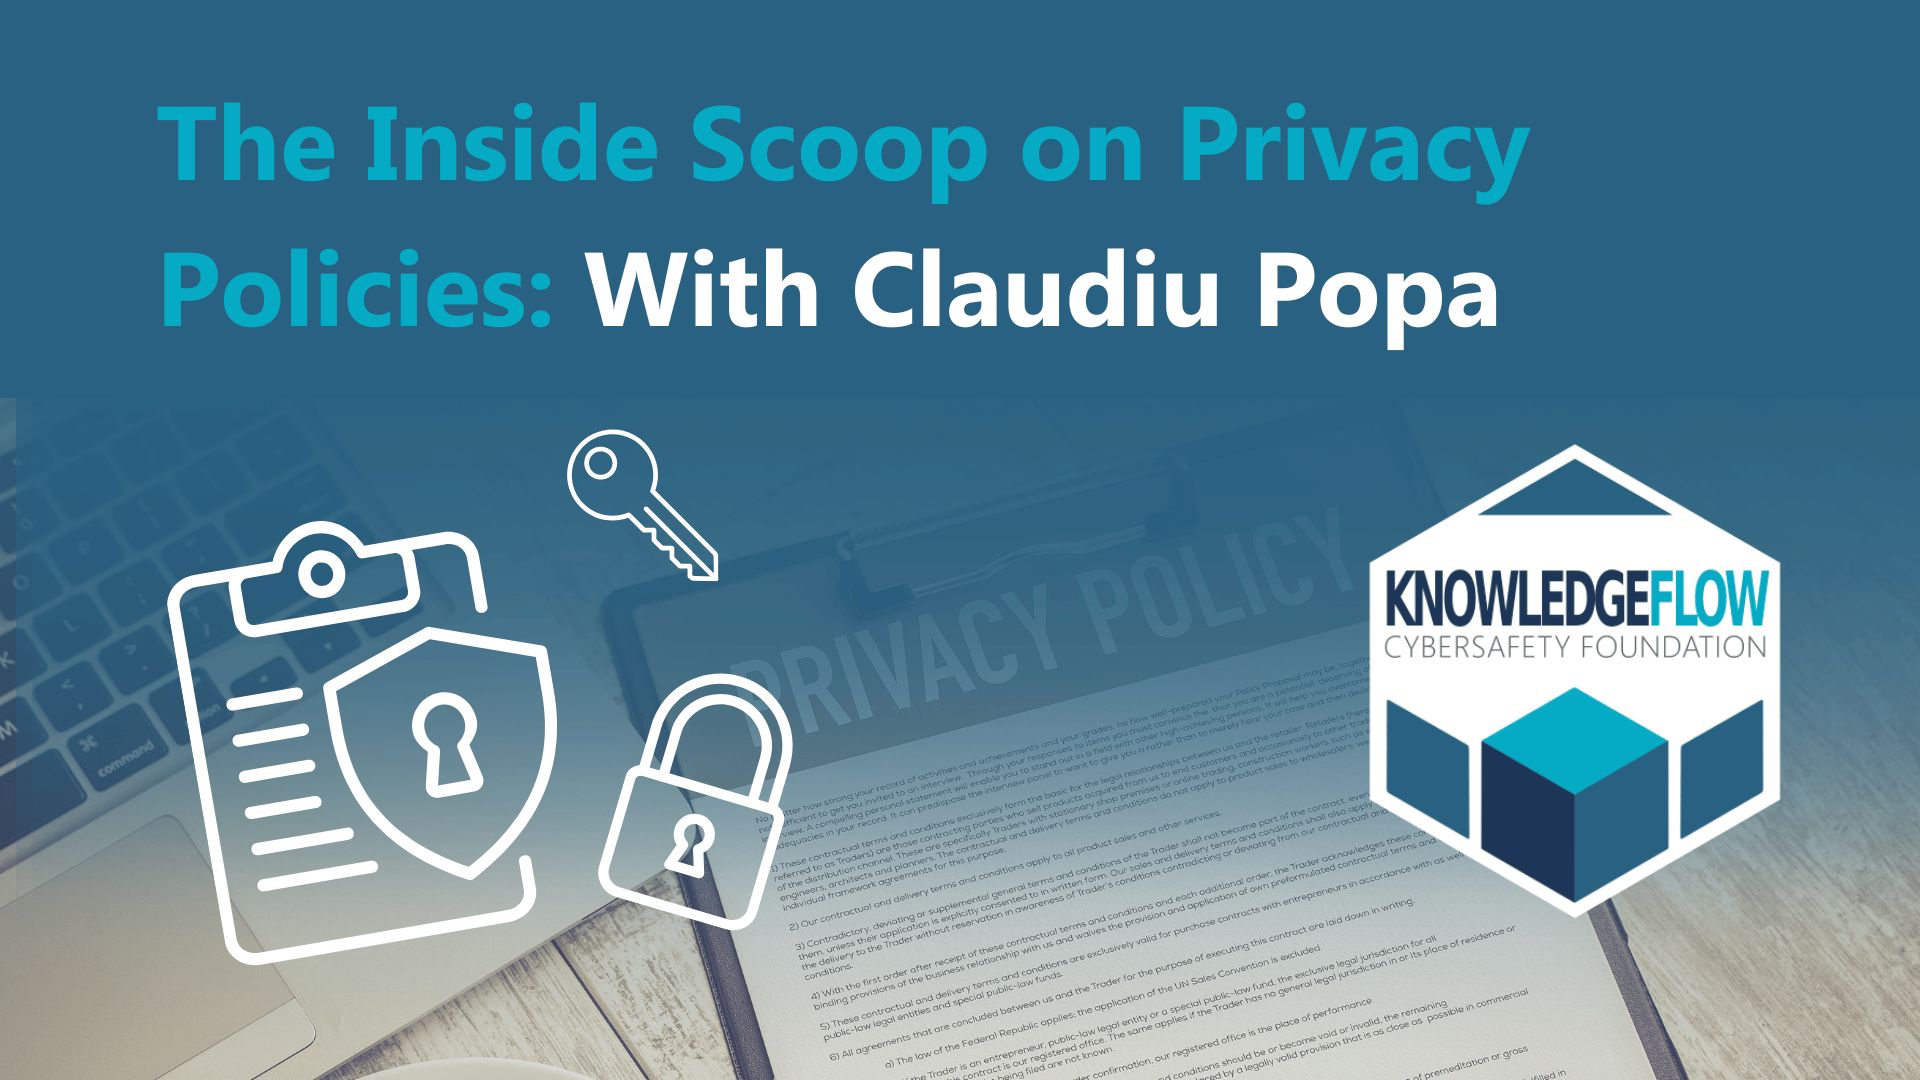 Les politiques de protection de la vie privée avec Claudiu Popa blog visual 270423